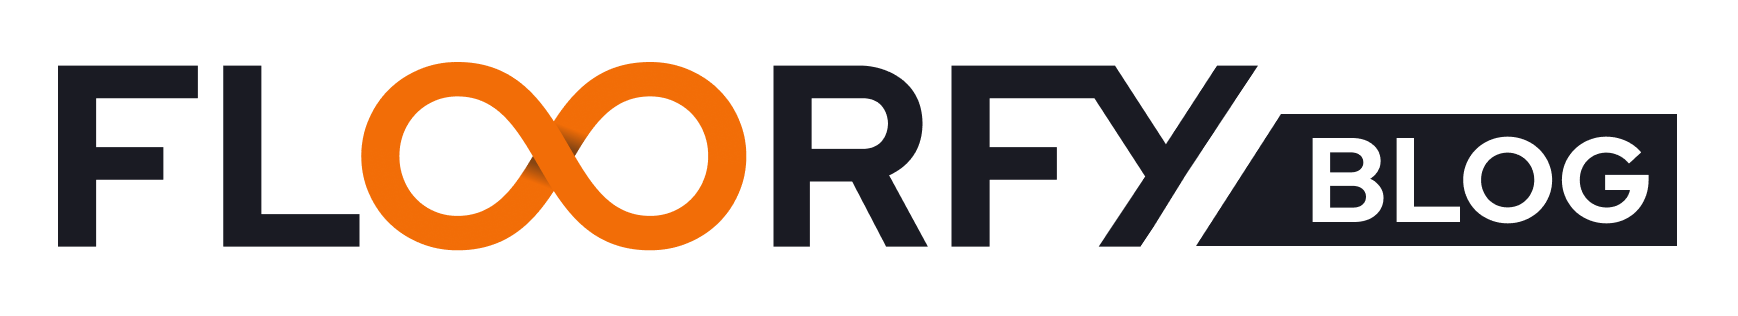 Floorfy-blog-logo